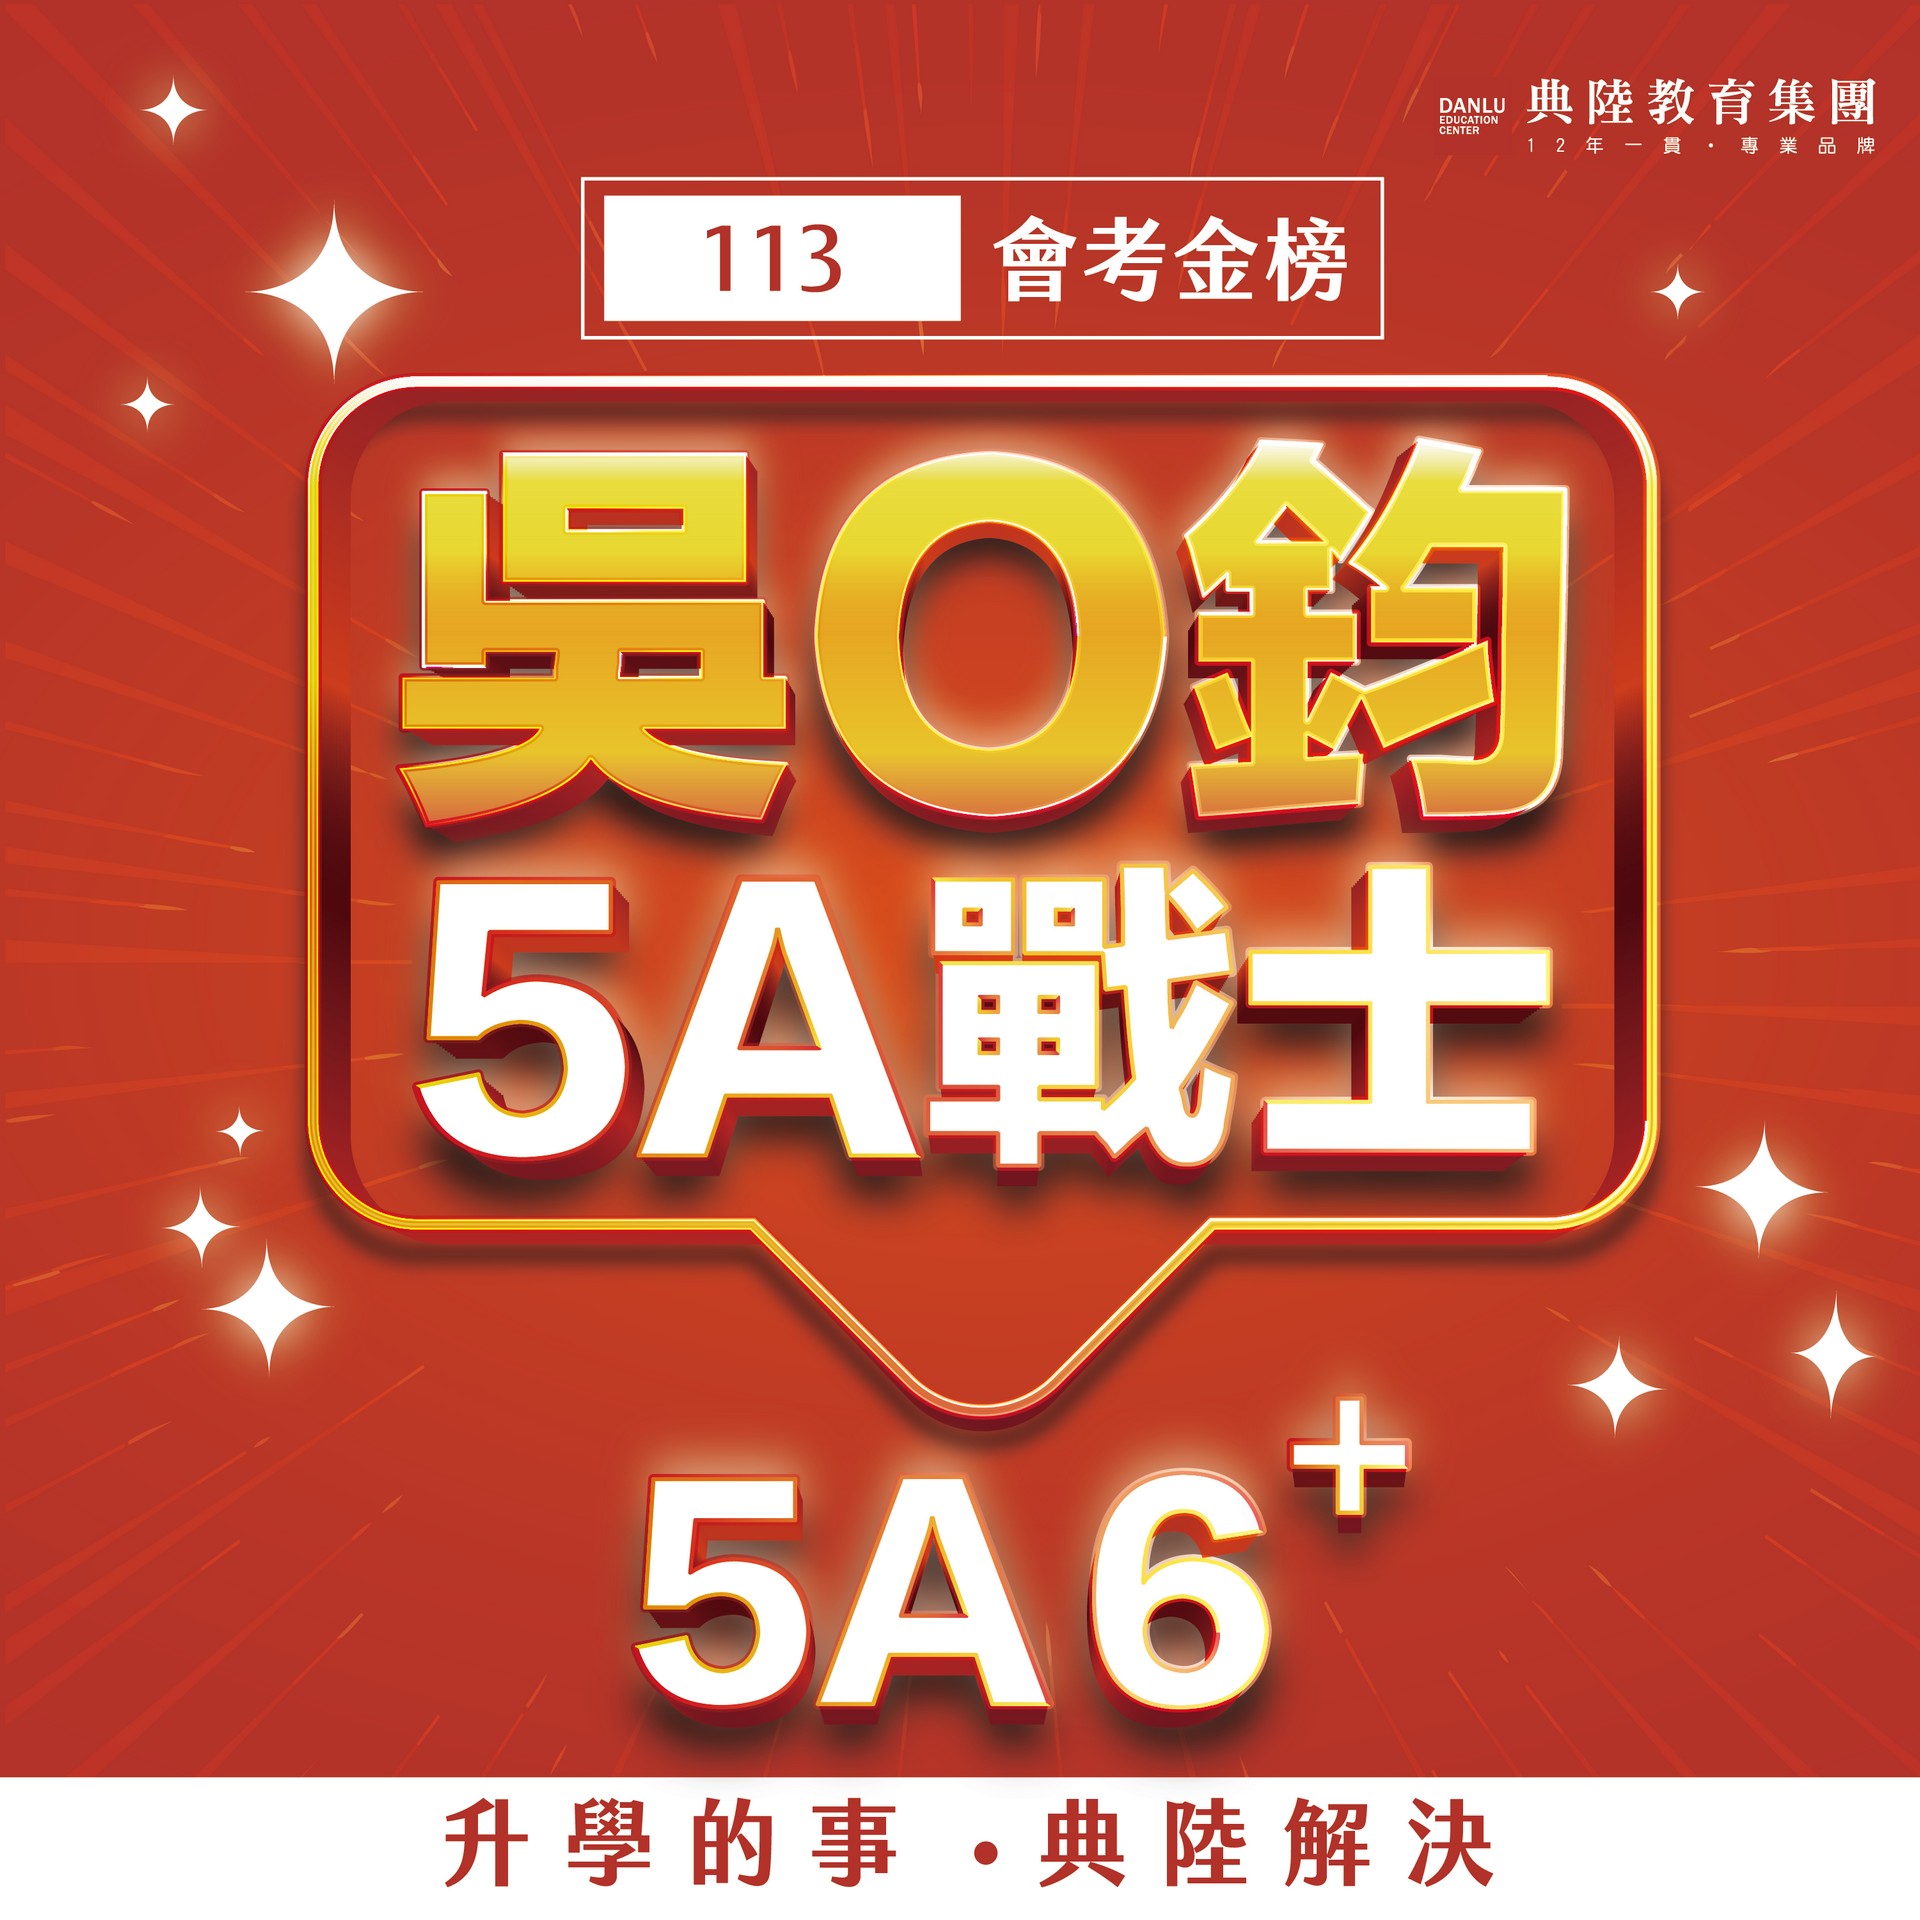 5A6+吳宇鈞